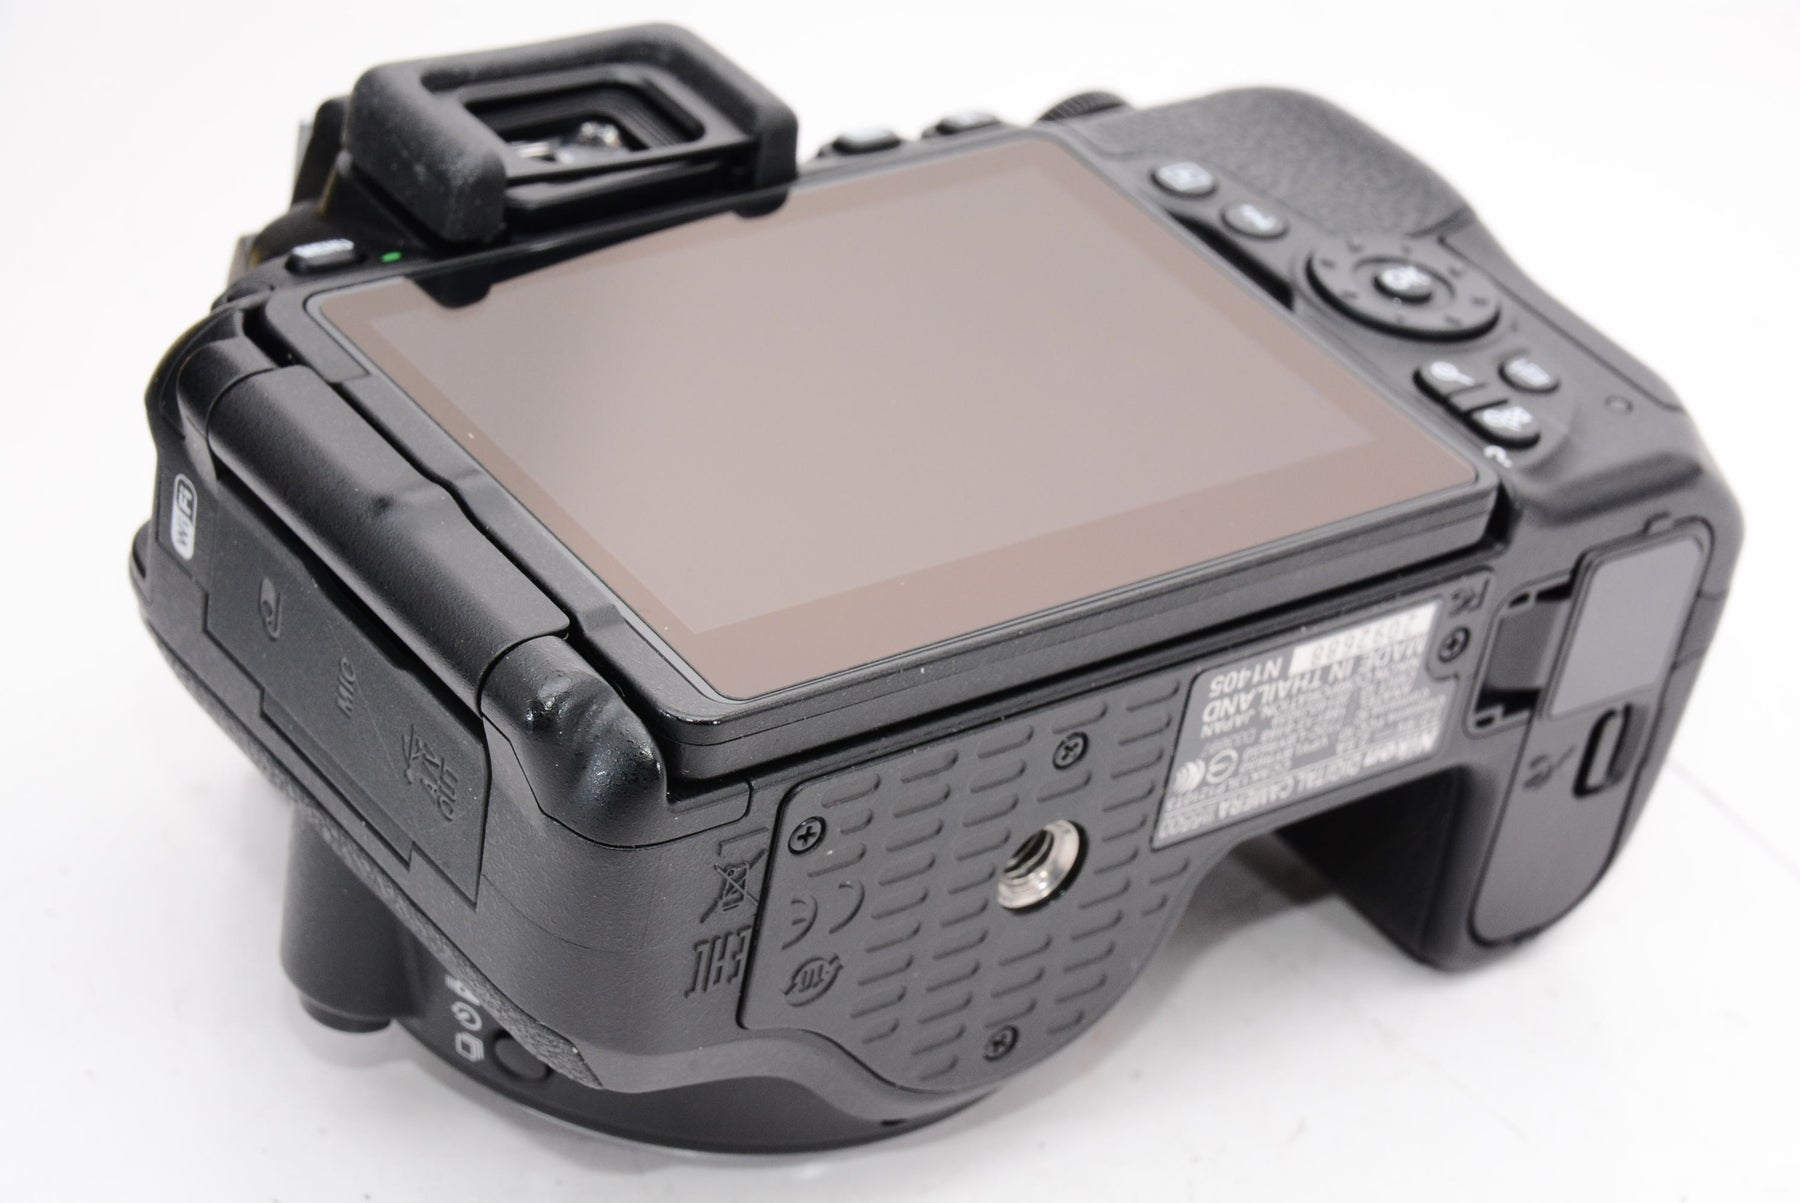 Nikon デジタル一眼レフカメラ D5500 ダブルズームキット ブラック 2416万画素 3.2型液晶 タッチパネルD5500WZBK - 4